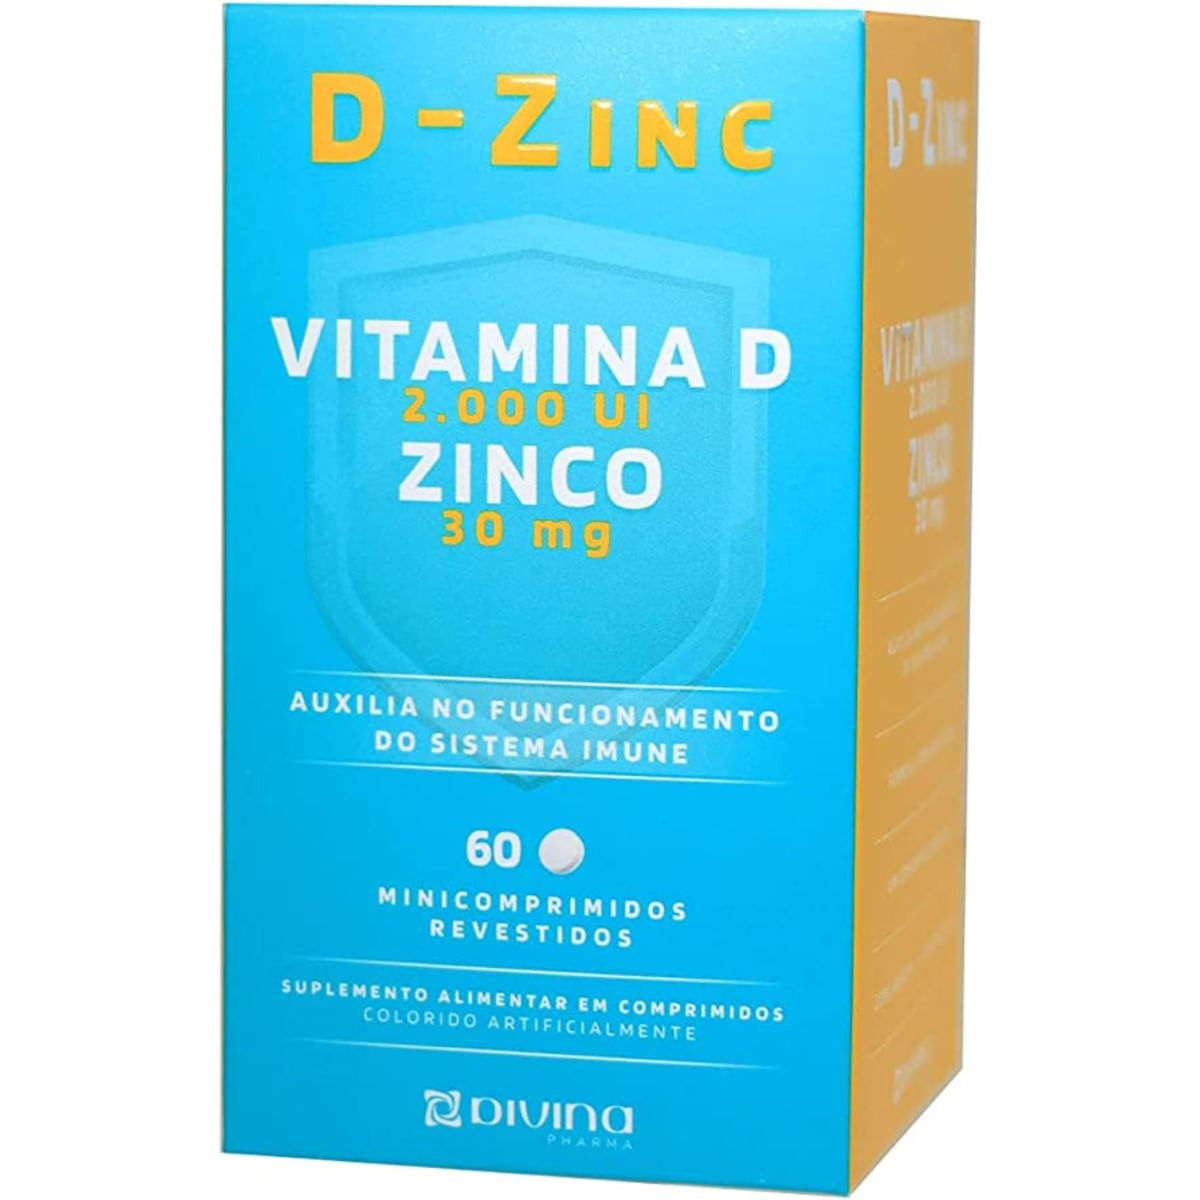 vitamina-d-e-zinco-divina-pharma-60-comprimidos-1.jpg